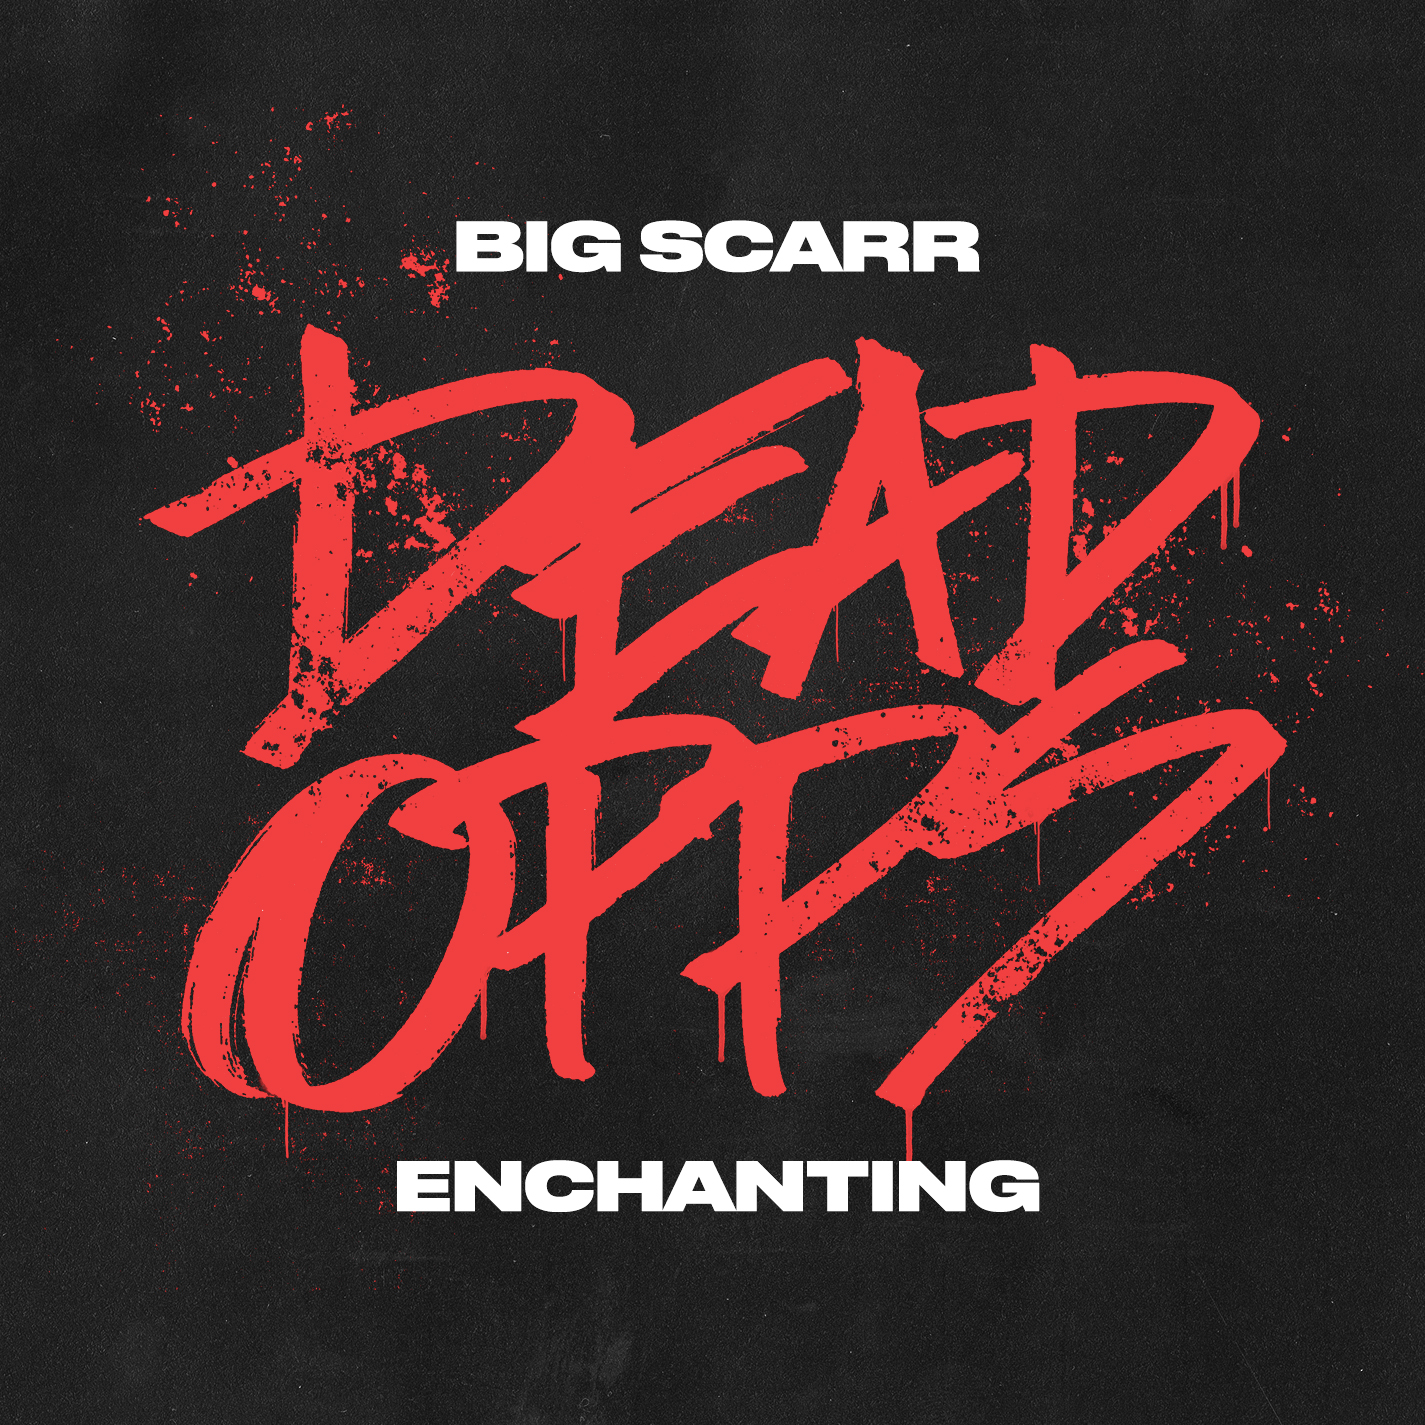 Dead Opps (Big Scarr & Enchanting) album image